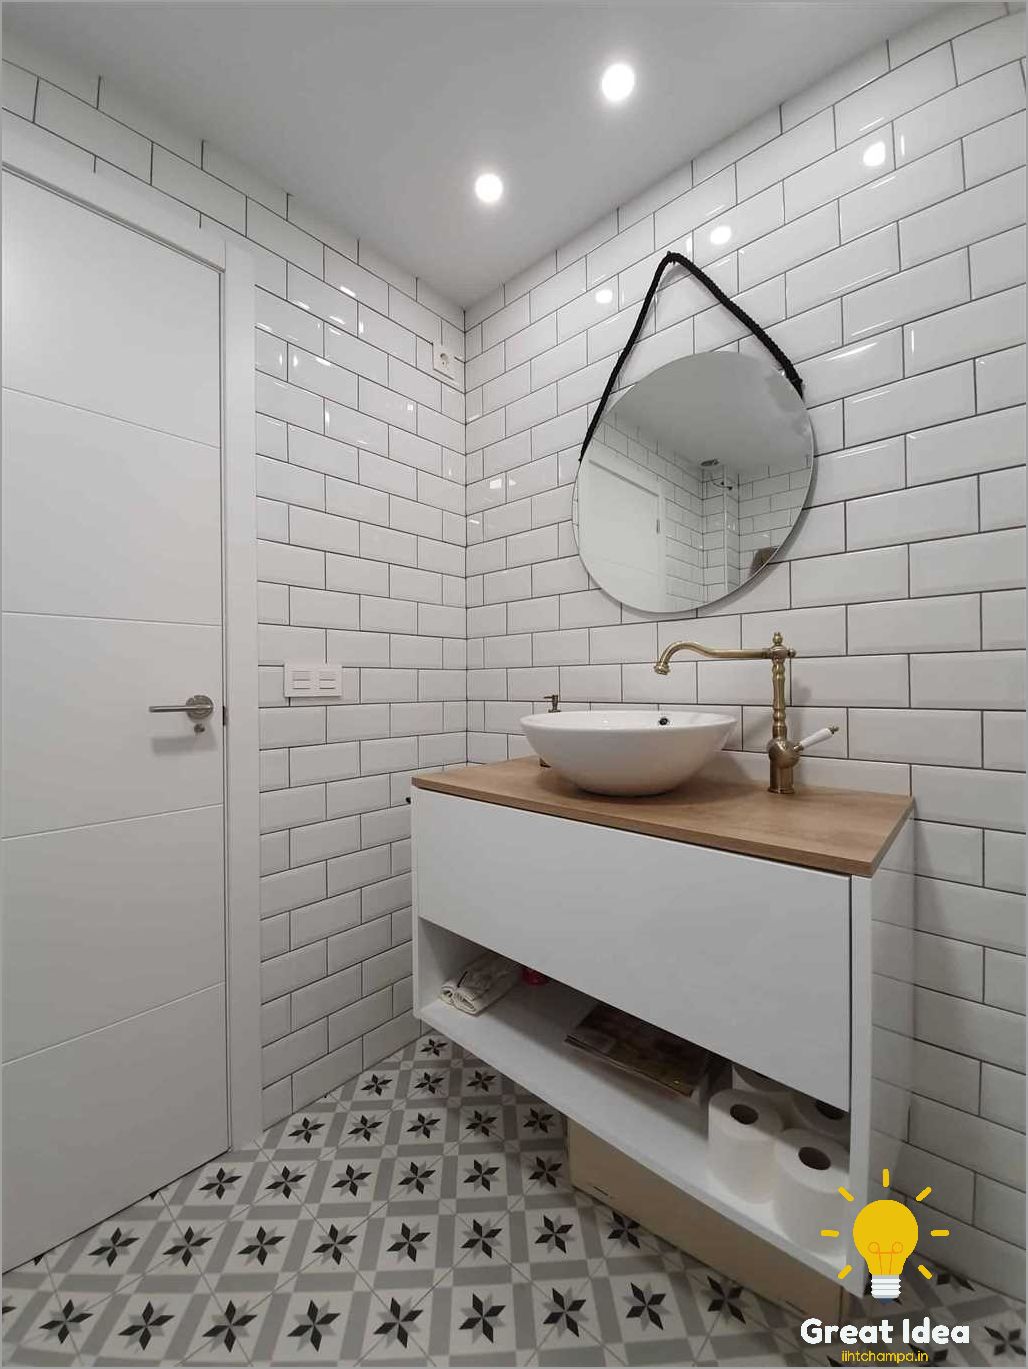 Vinyl Flooring Ideas for Small Bathroom - Transform Your Space